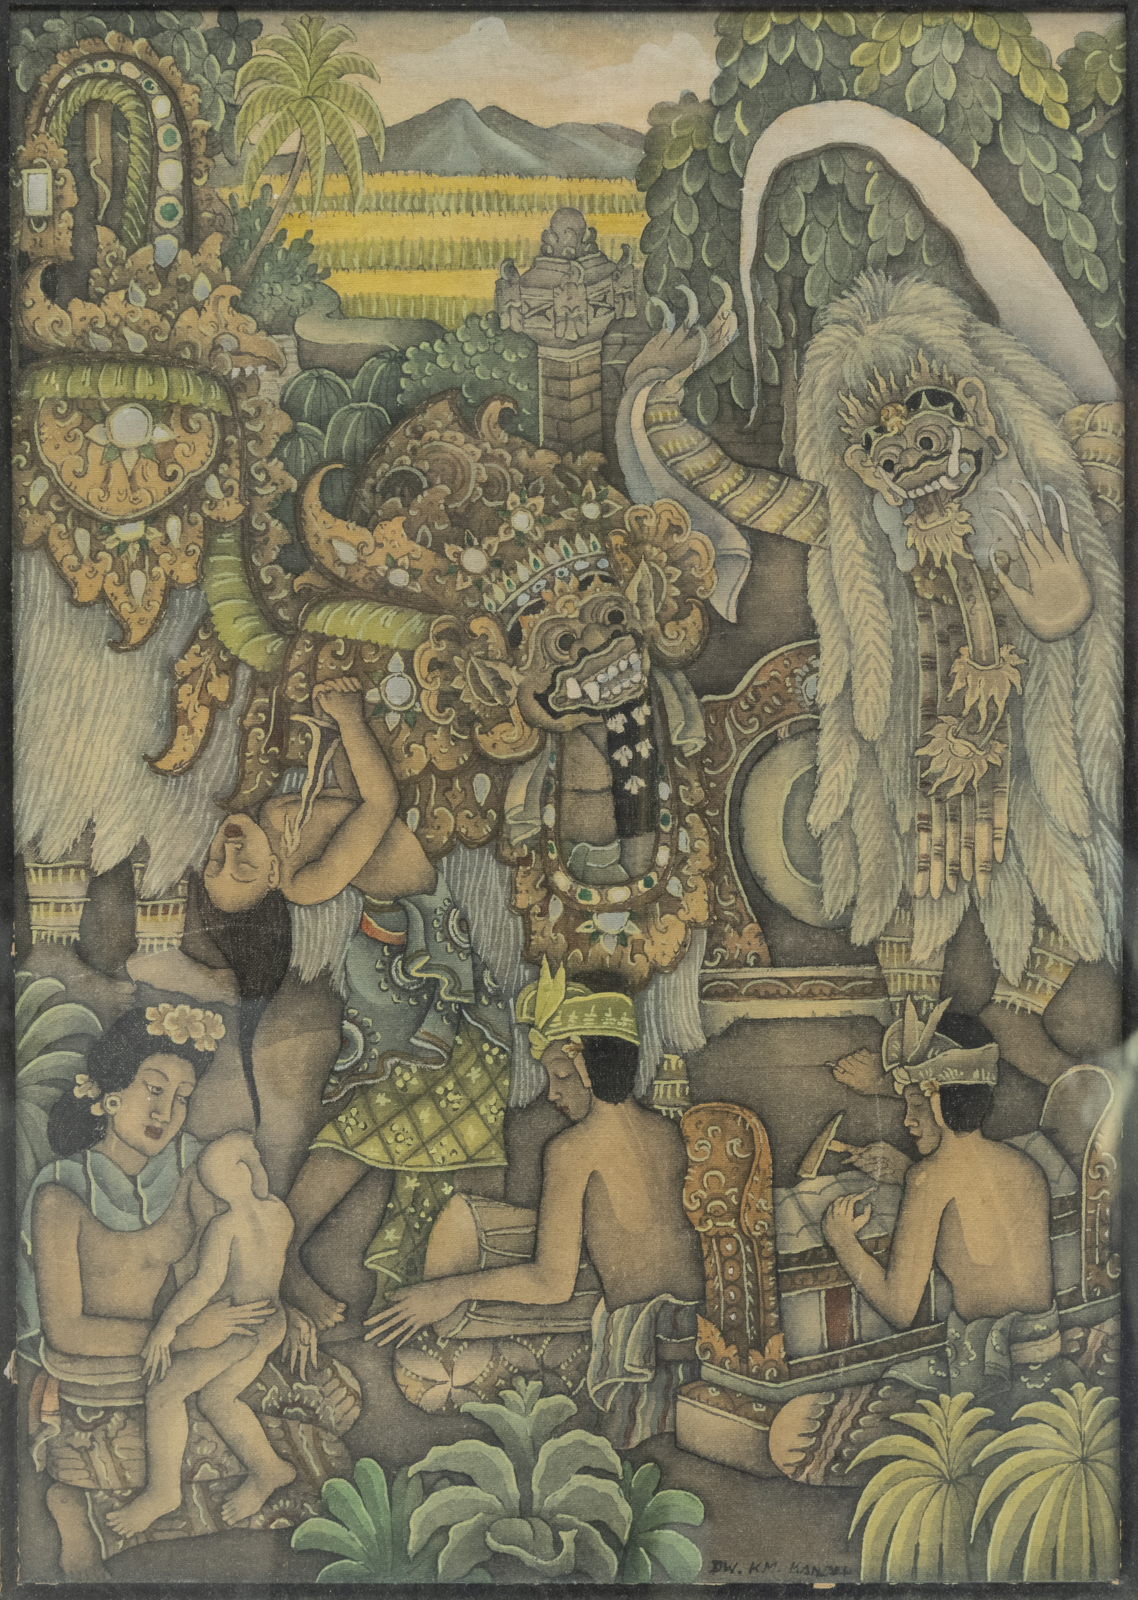 Balinese painting